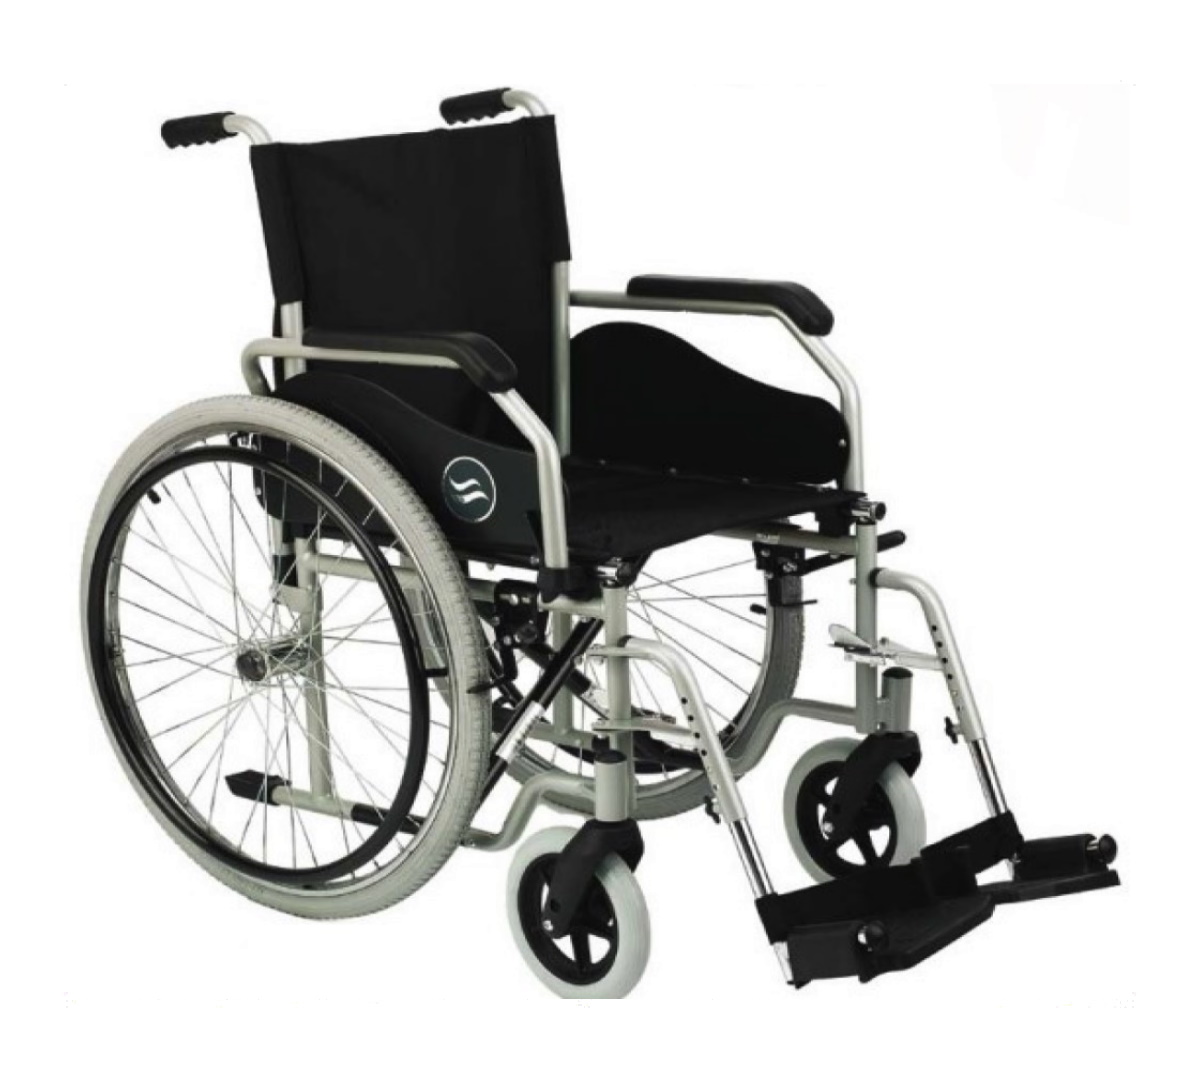 BREEZY | Breezy 90 Manuel Tekerlekli Sandalye (ÖN SİPARİŞ ZORUNLUDUR) | Akülü Tekerlekli Sandalye | Tekerlekli Sandalye